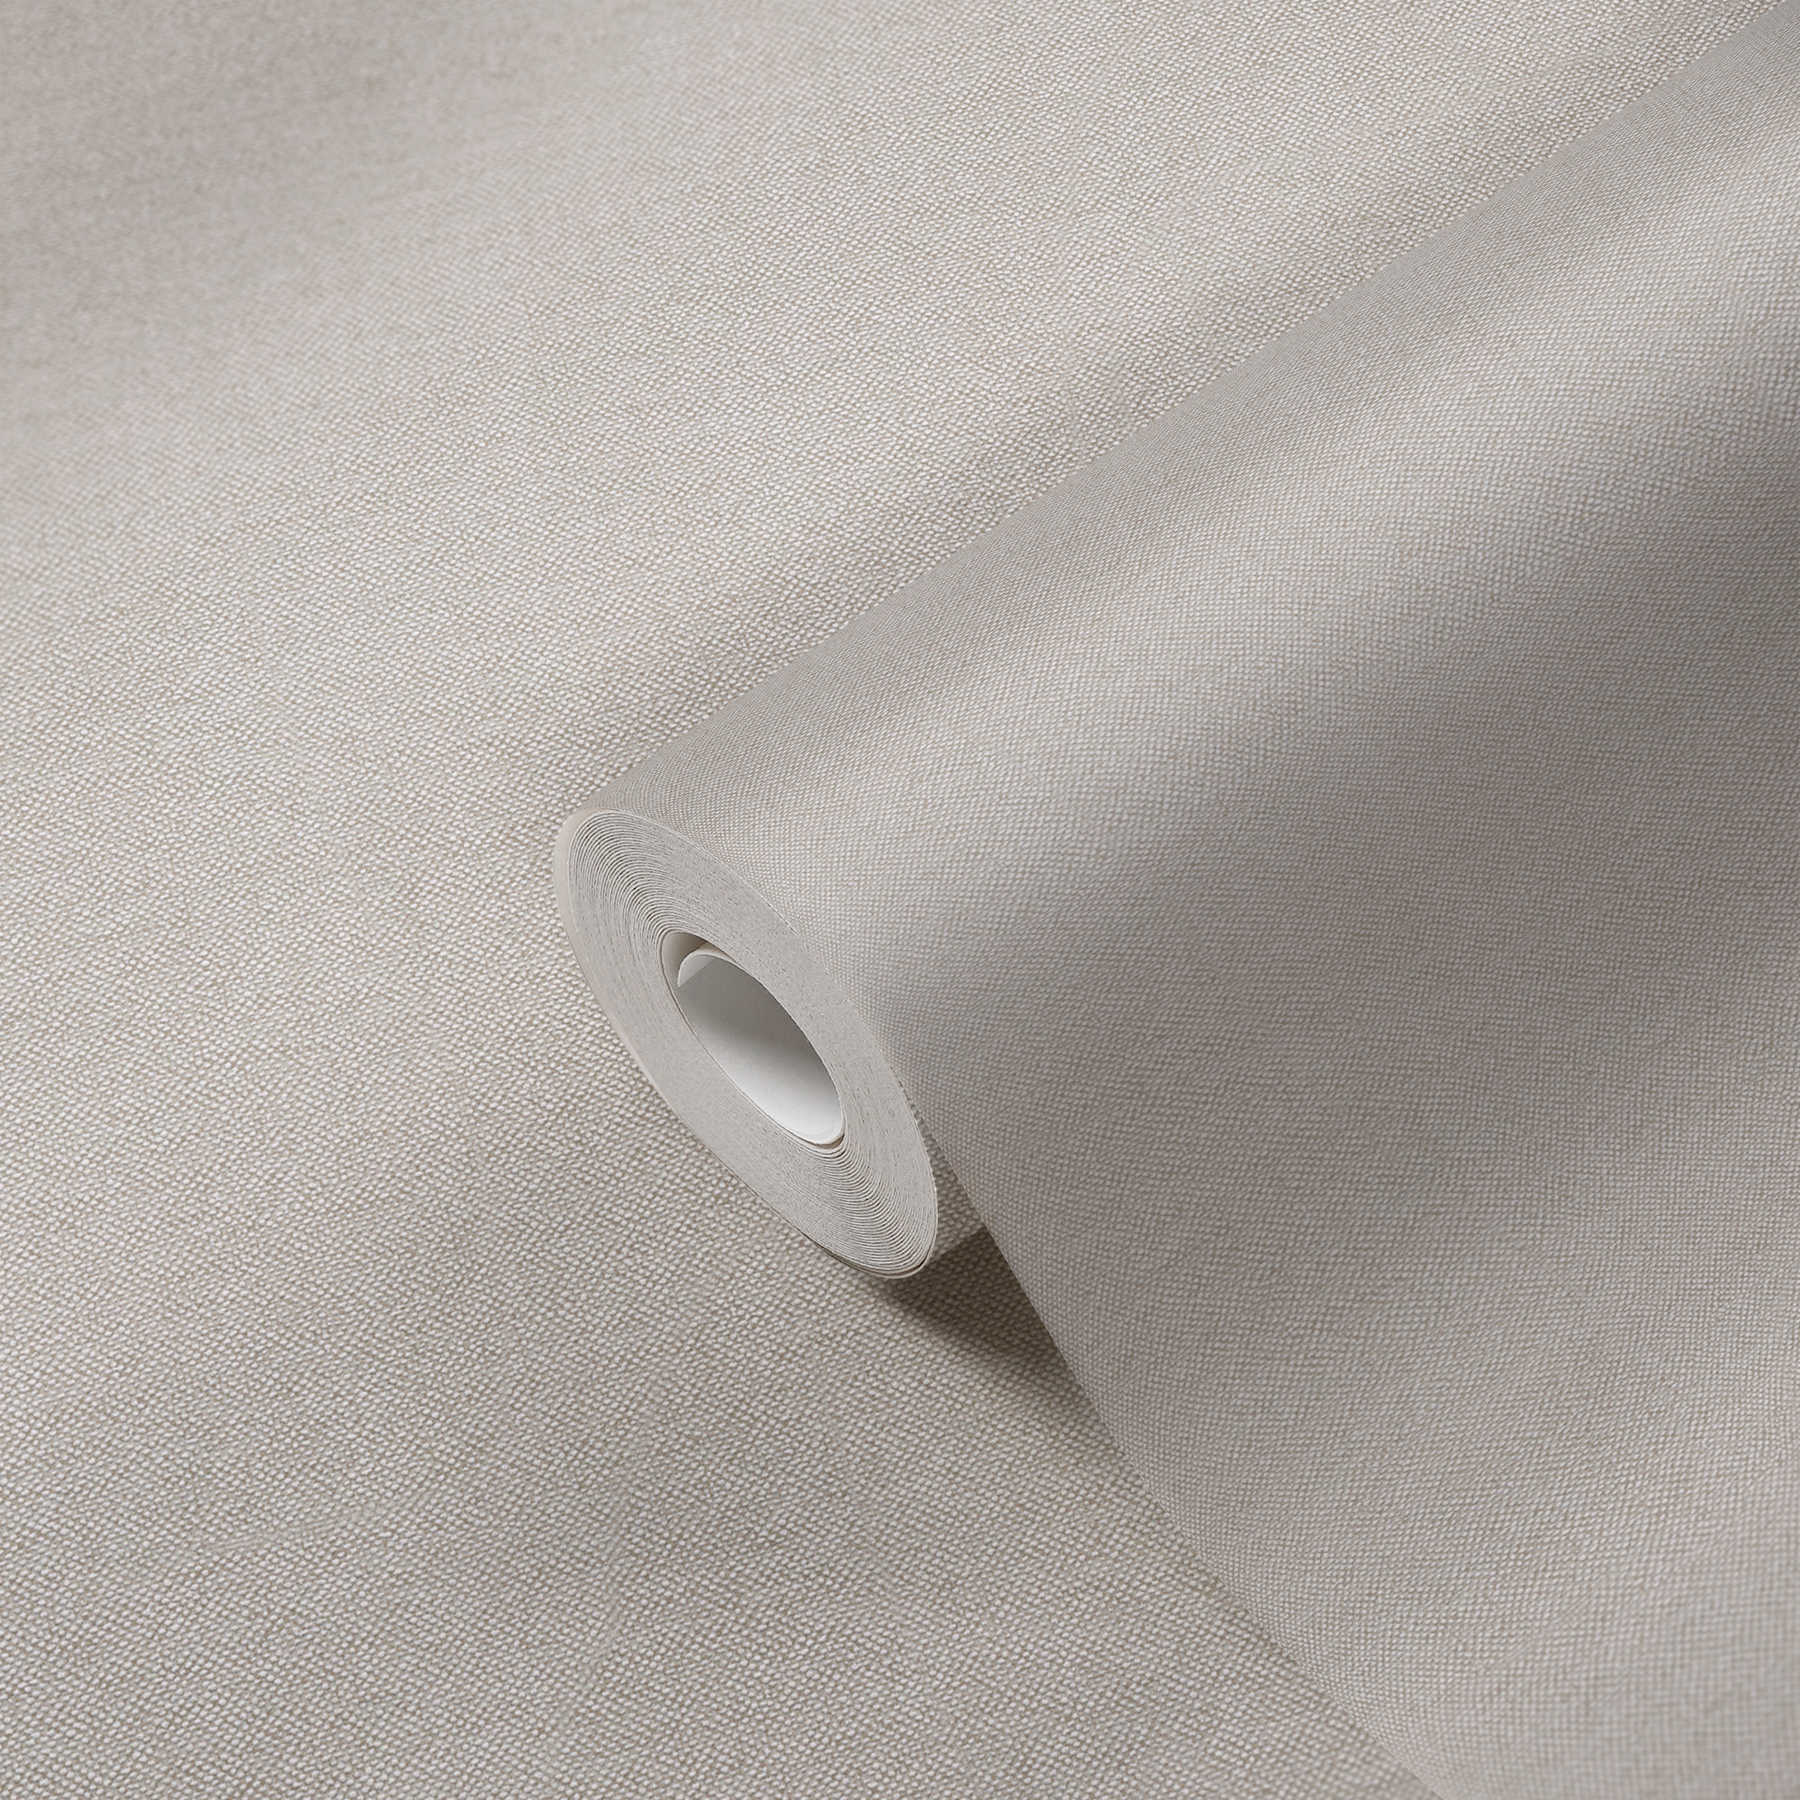             Plain wallpaper with textile structure in elegant design - beige, brown
        